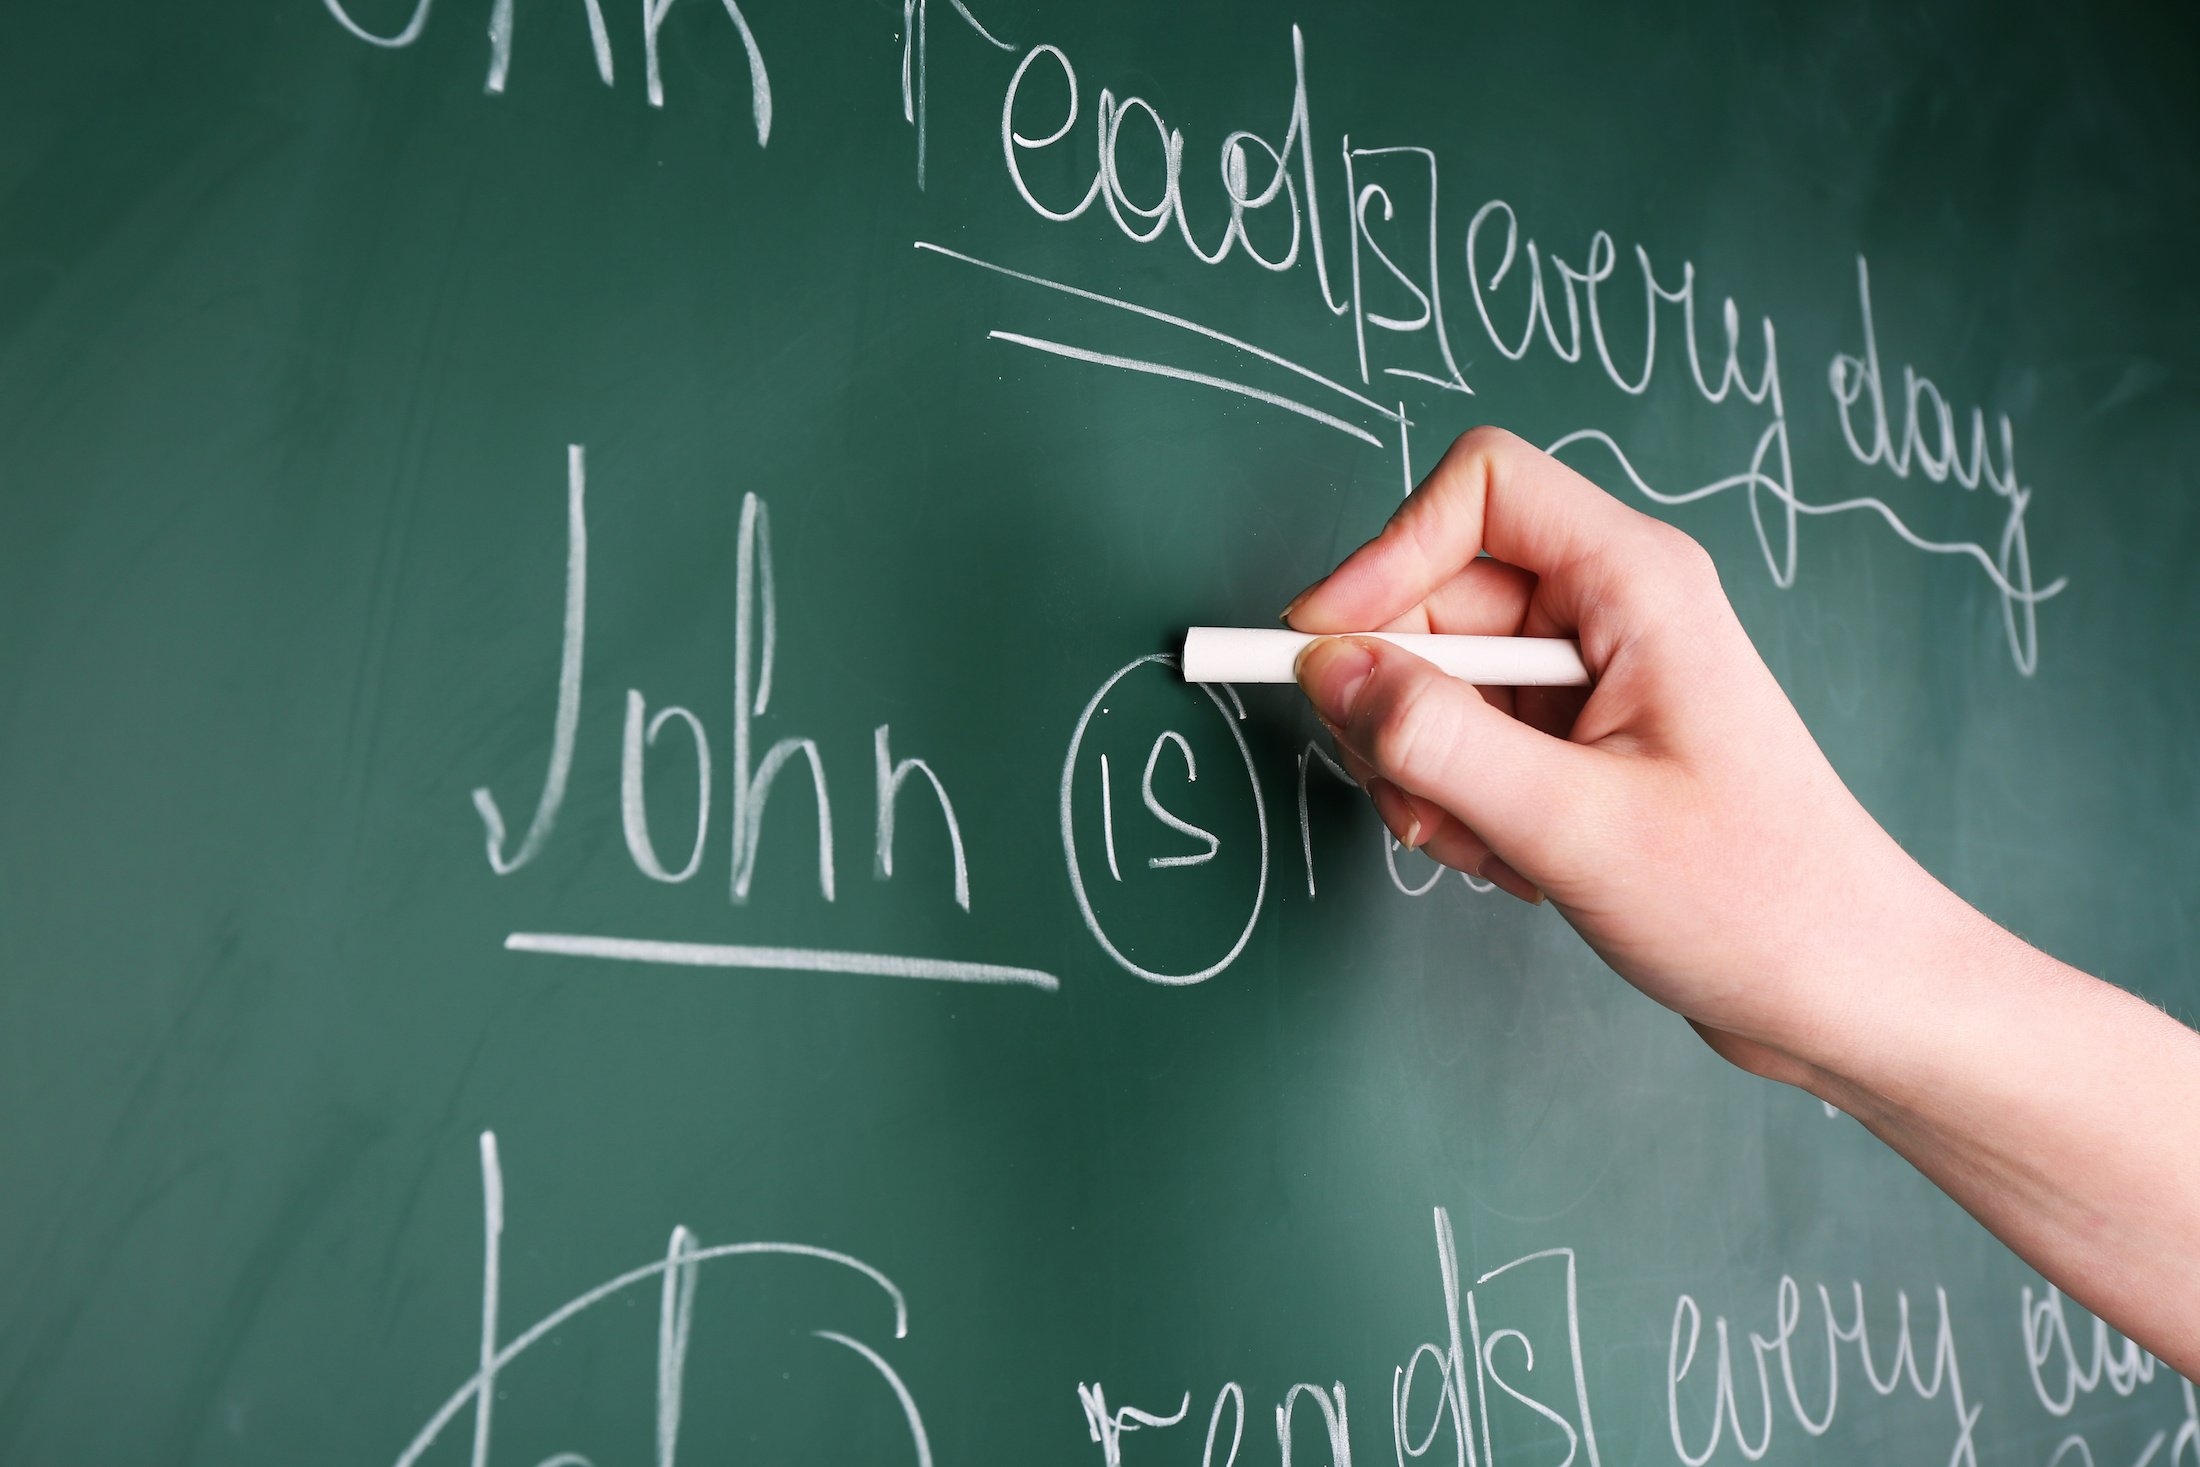 Grammar exercises on blackboard